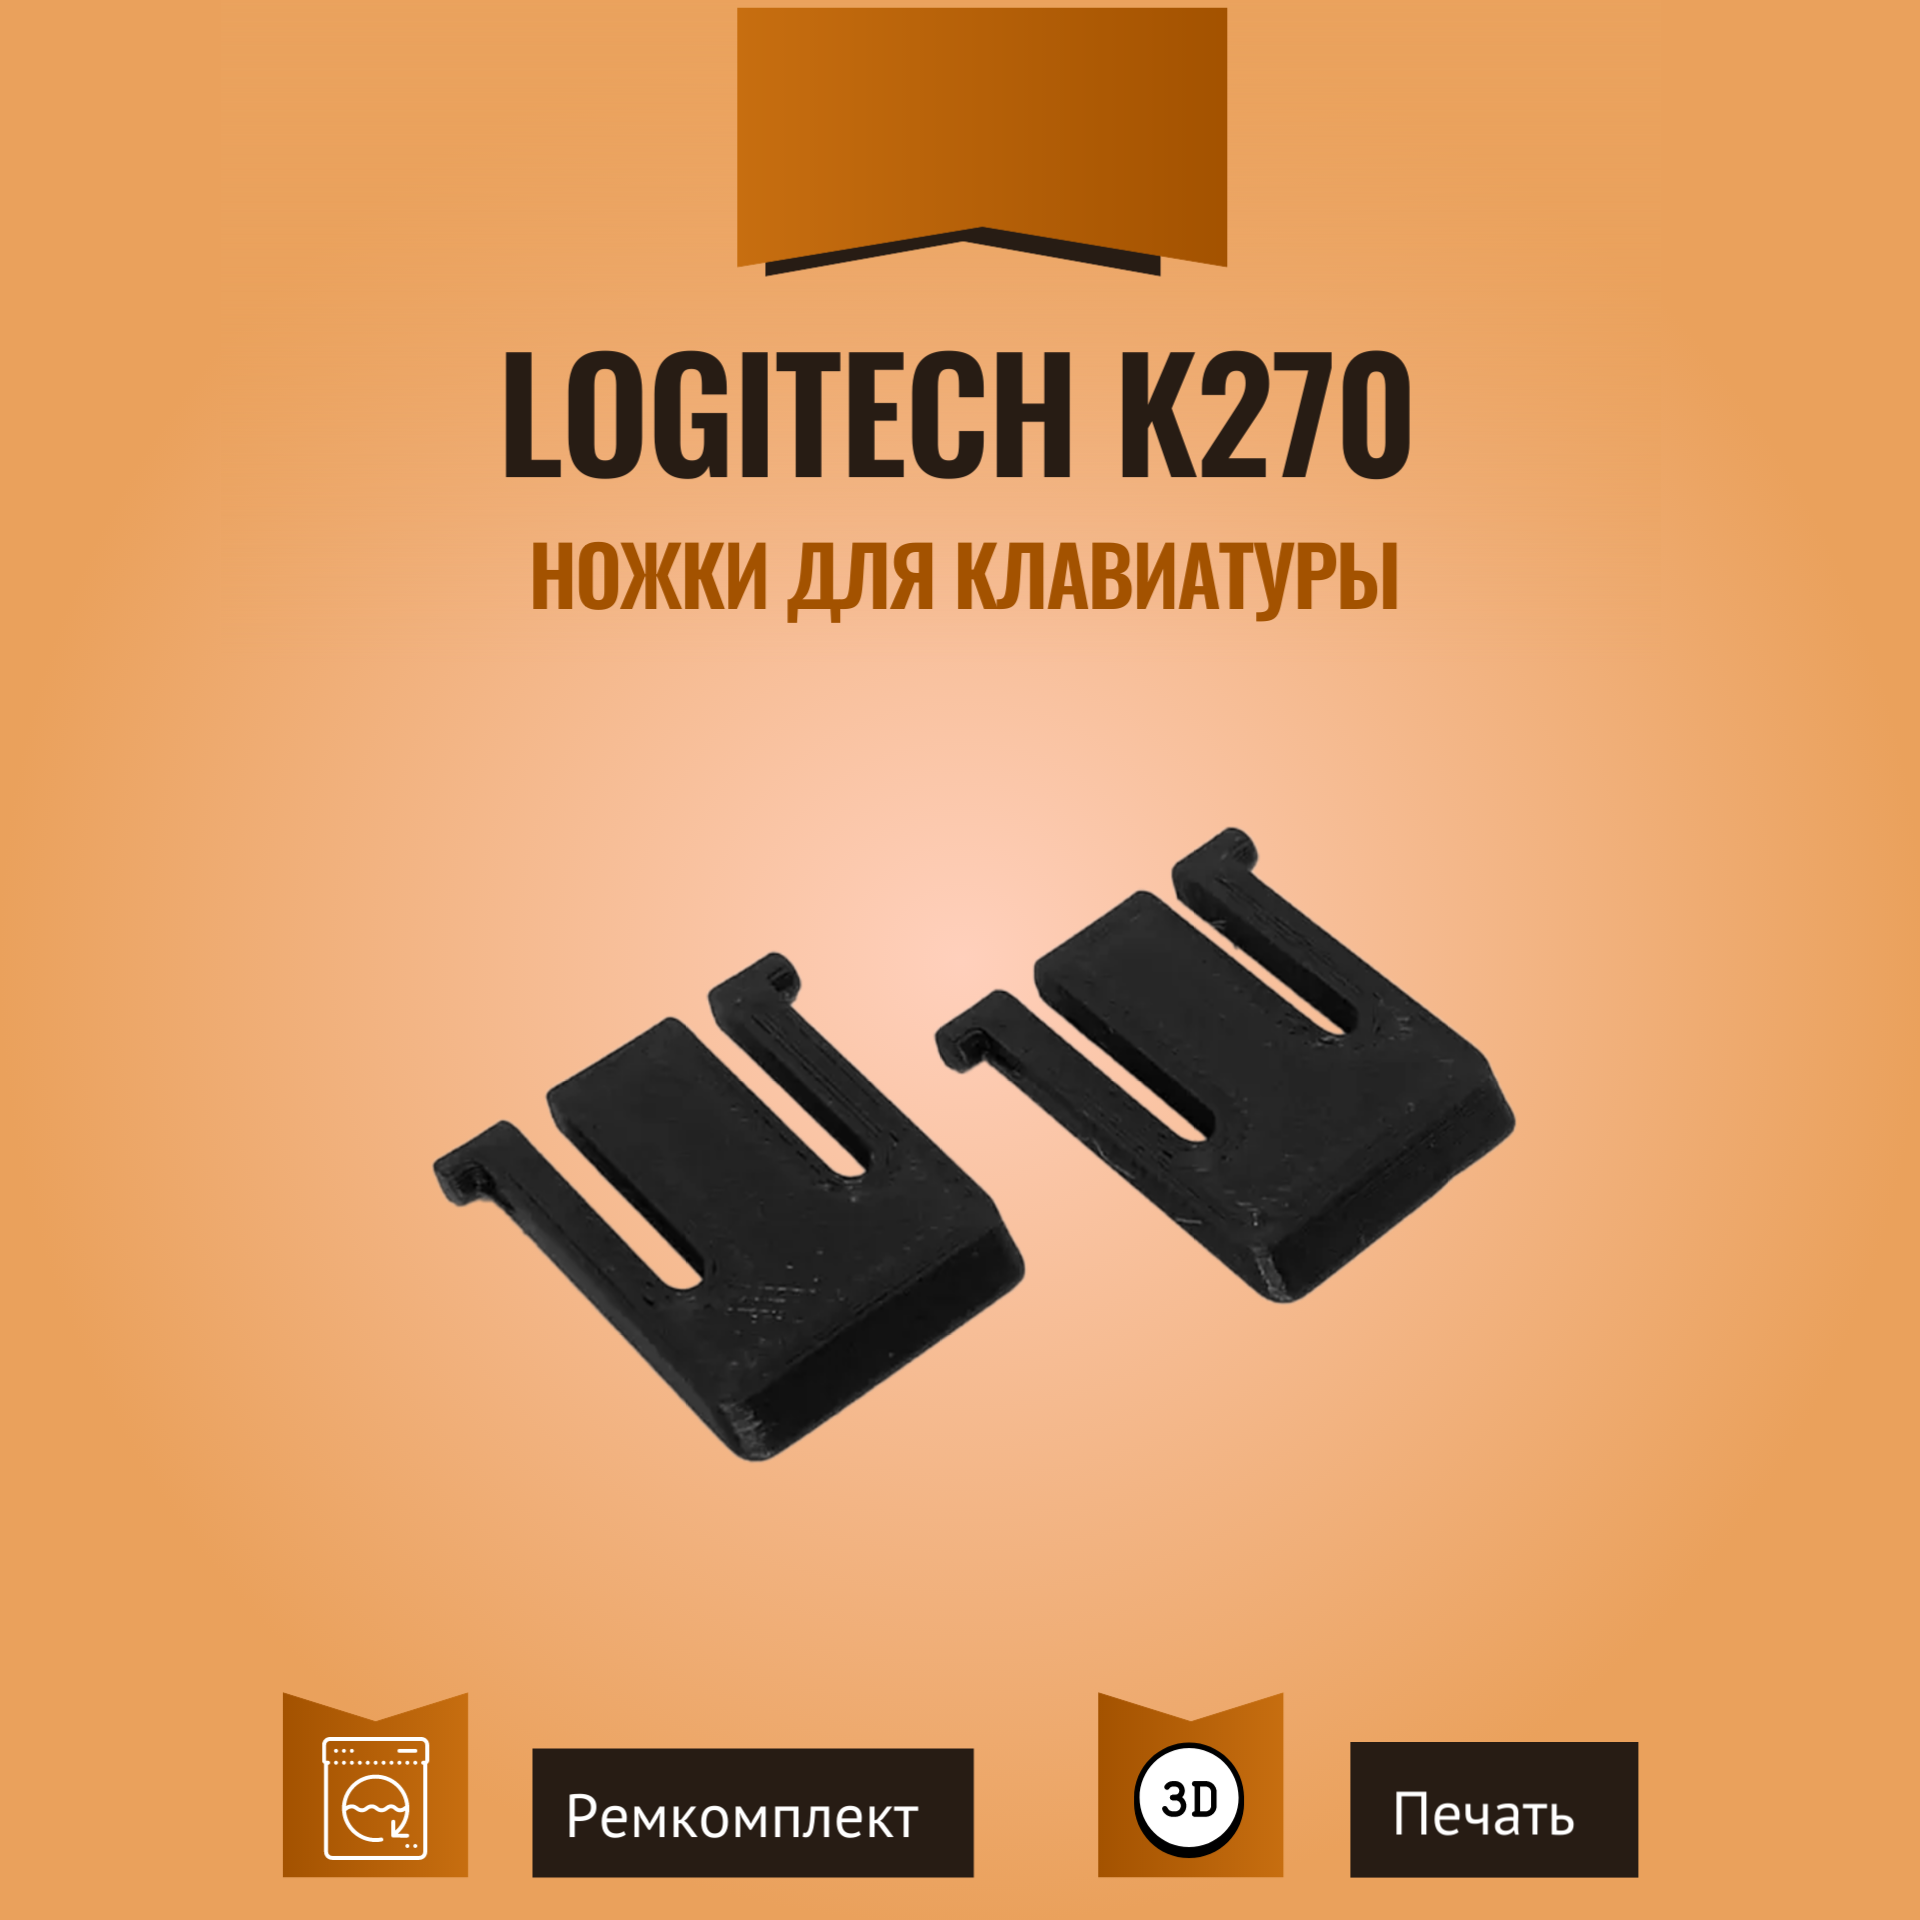 Ножки для клавиатуры Logitech K270, 2 шт. 2 шт.